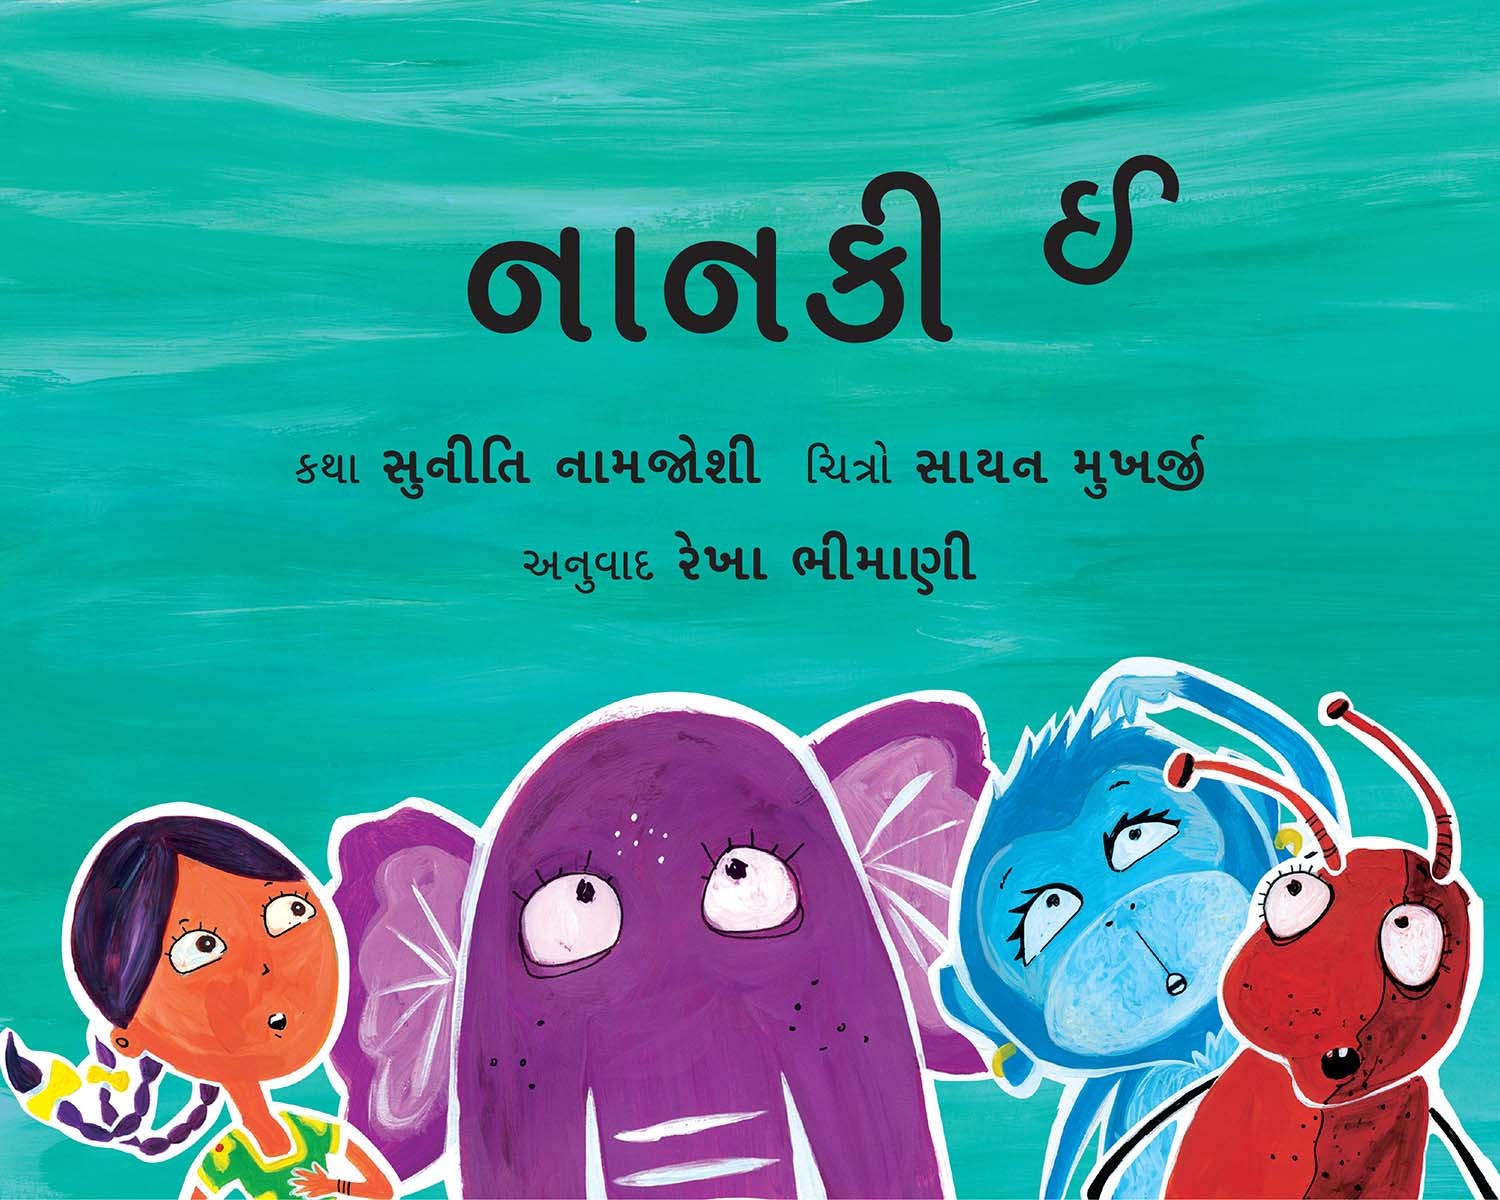 Little i/Nanki E (Gujarati)